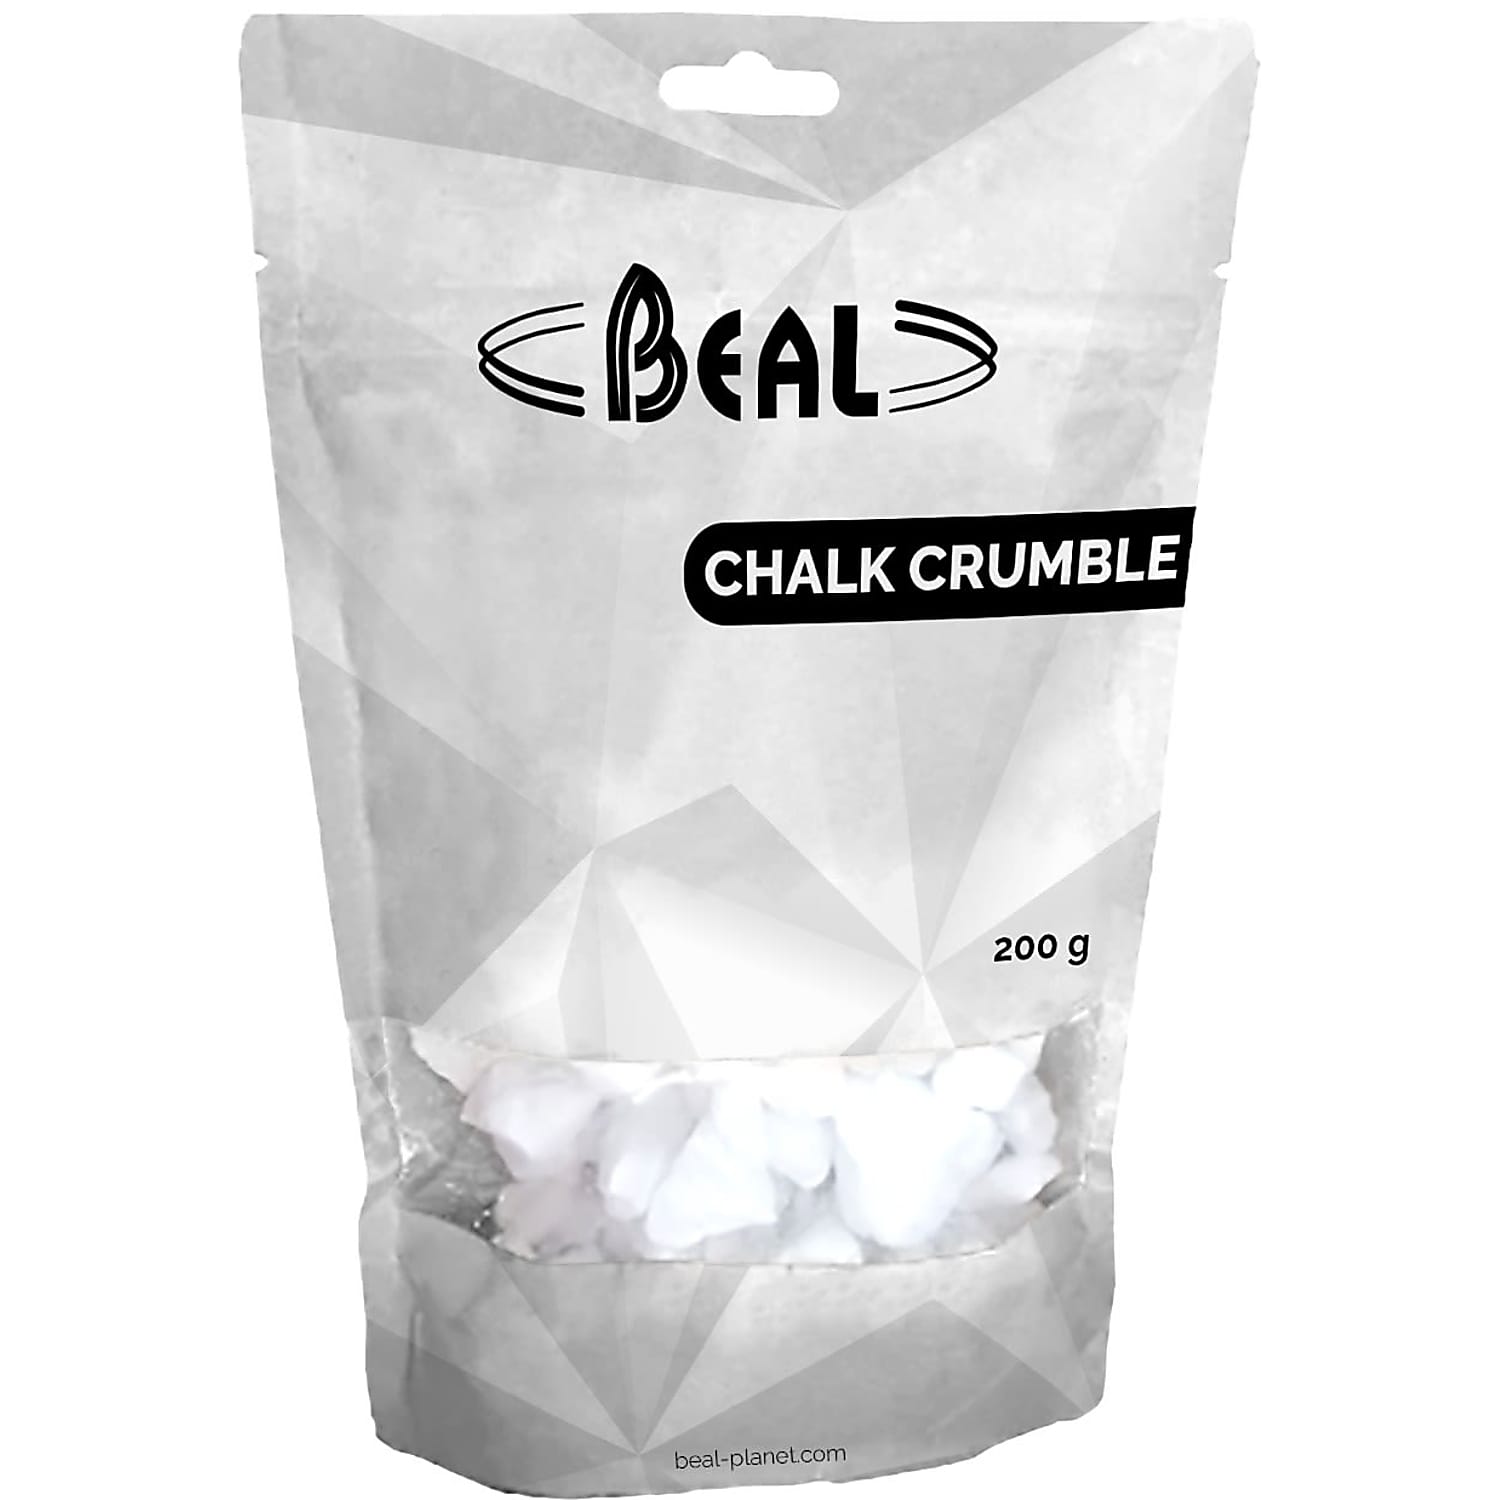 Beal Chalk Crumble - Chalk